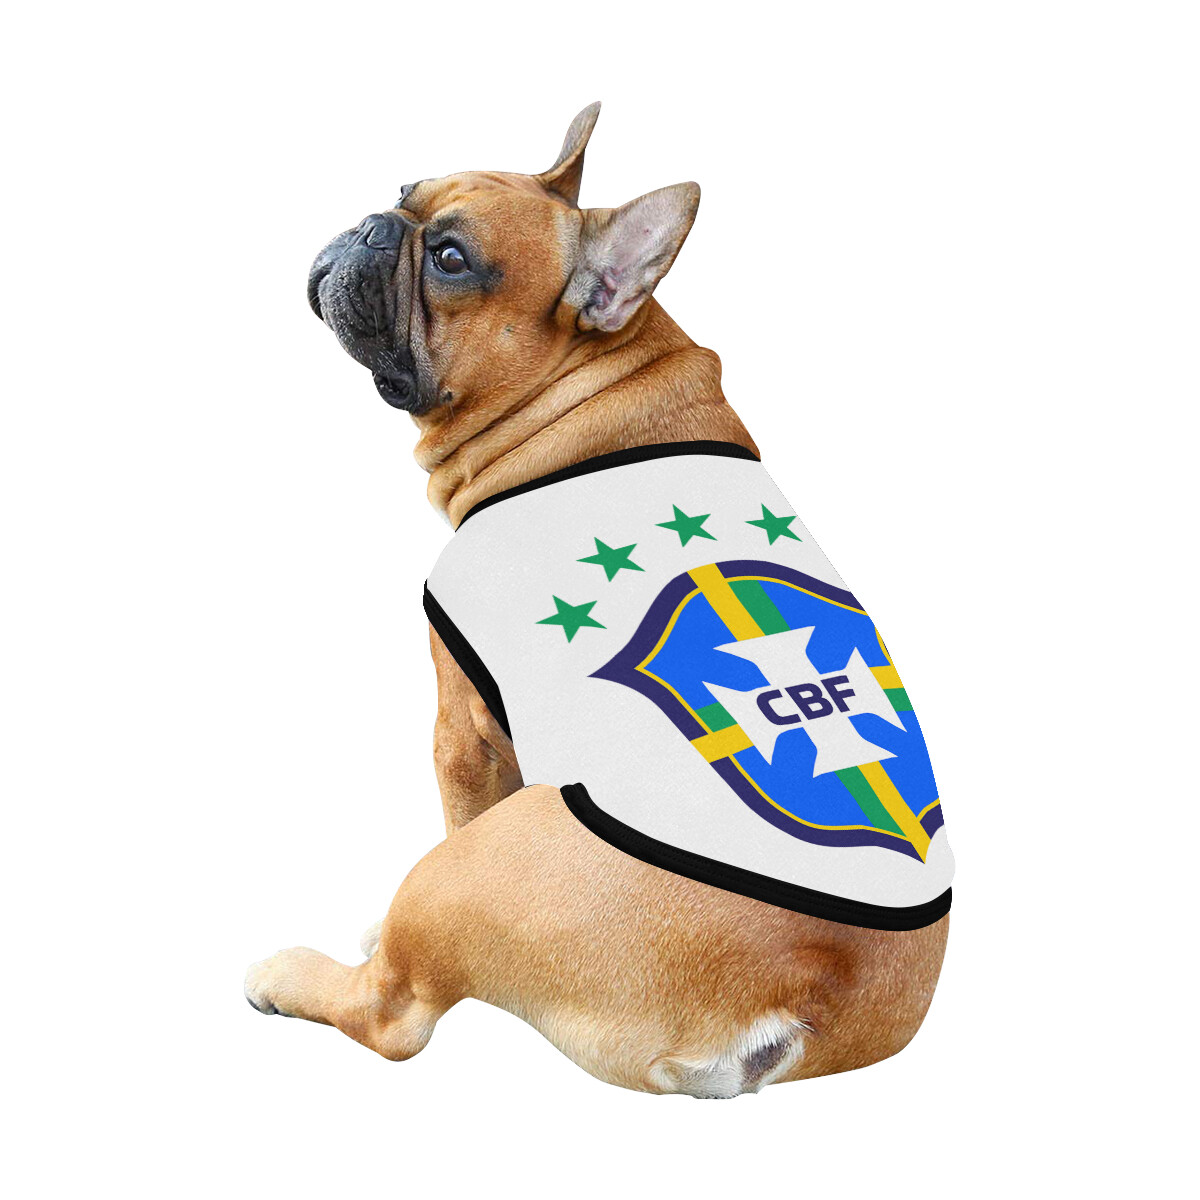 🐕🇧🇷⚽️ Brazil, Soccer Team, Dog t-shirt, Dog Tank Top, Dog shirt, Dog clothes, Dog jersey, Gift, 7 sizes XS to 3XL, Brazilian, I love sports, white